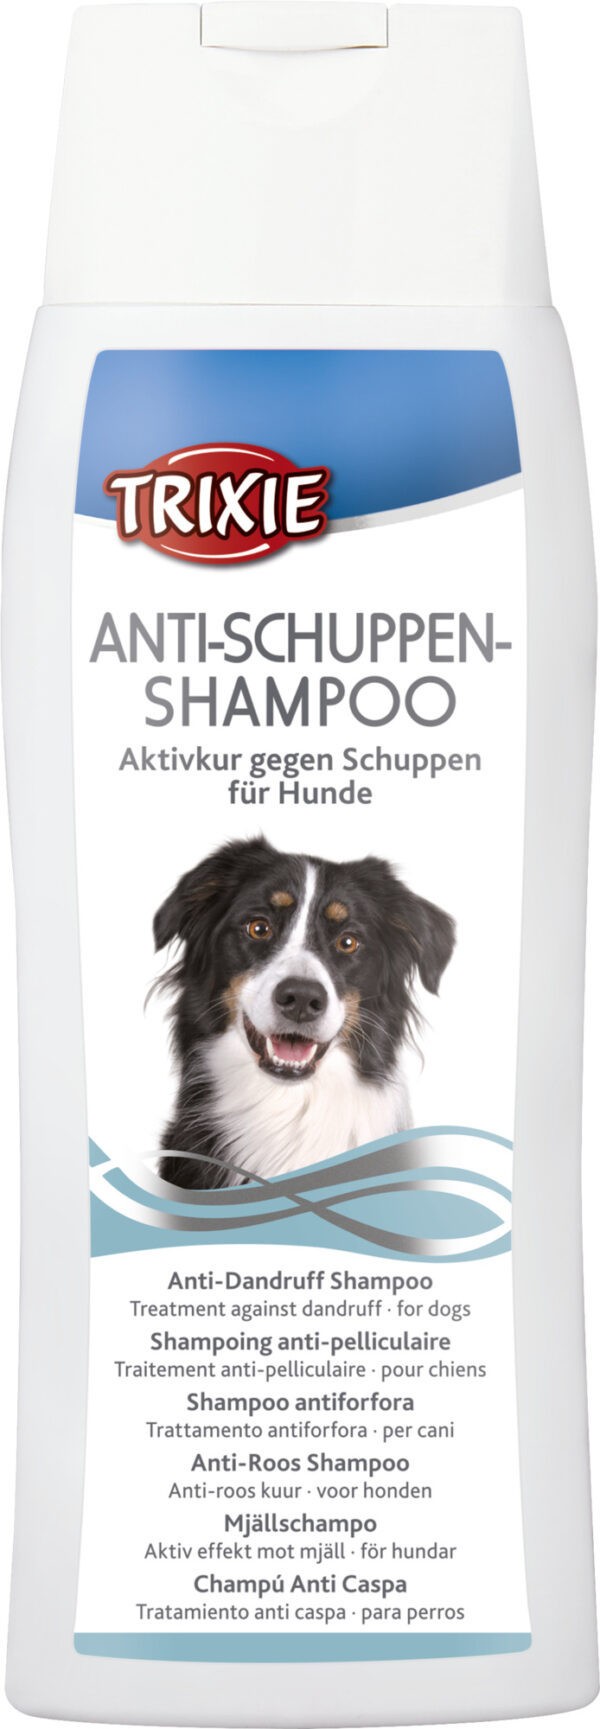 trixie-hygiene-pflegebedarf-anti-schuppen-shampoo-2904-tierbedarf-bvl-shop